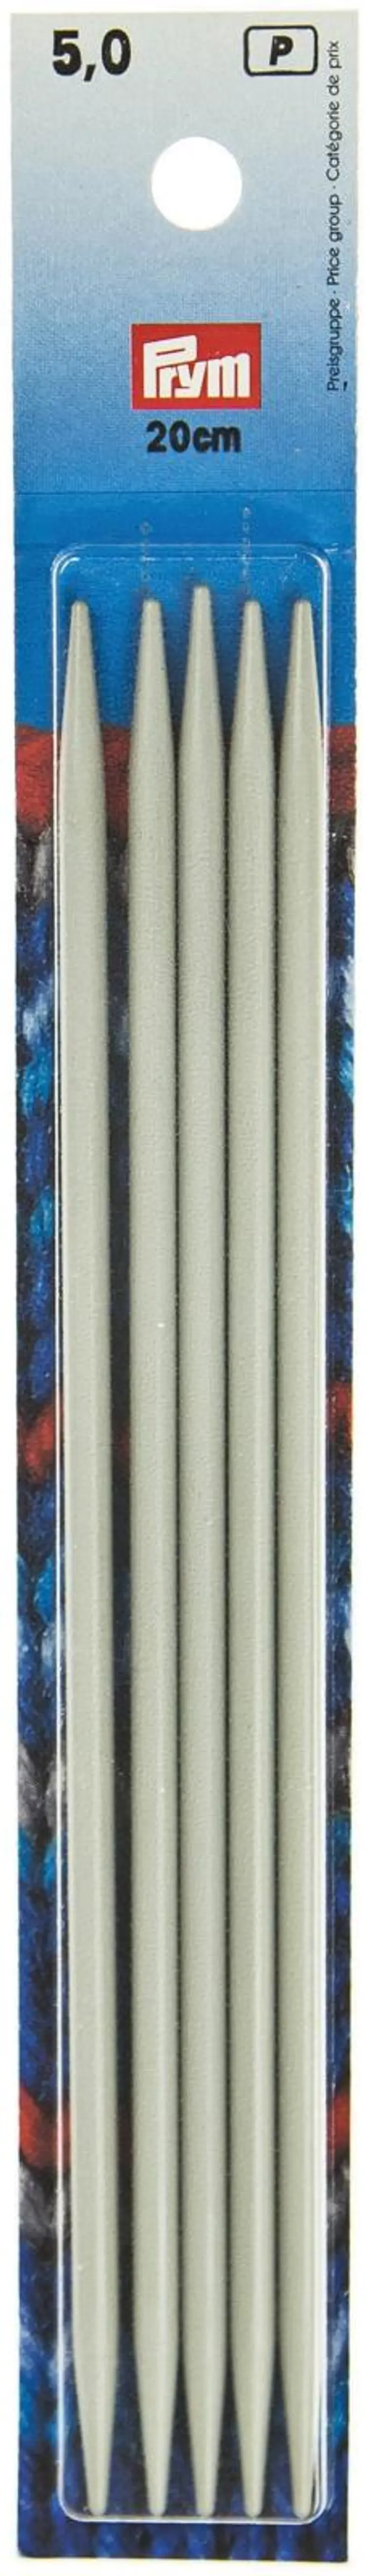 Prym Sukkapuikko alumiini 20cm - 5 mm